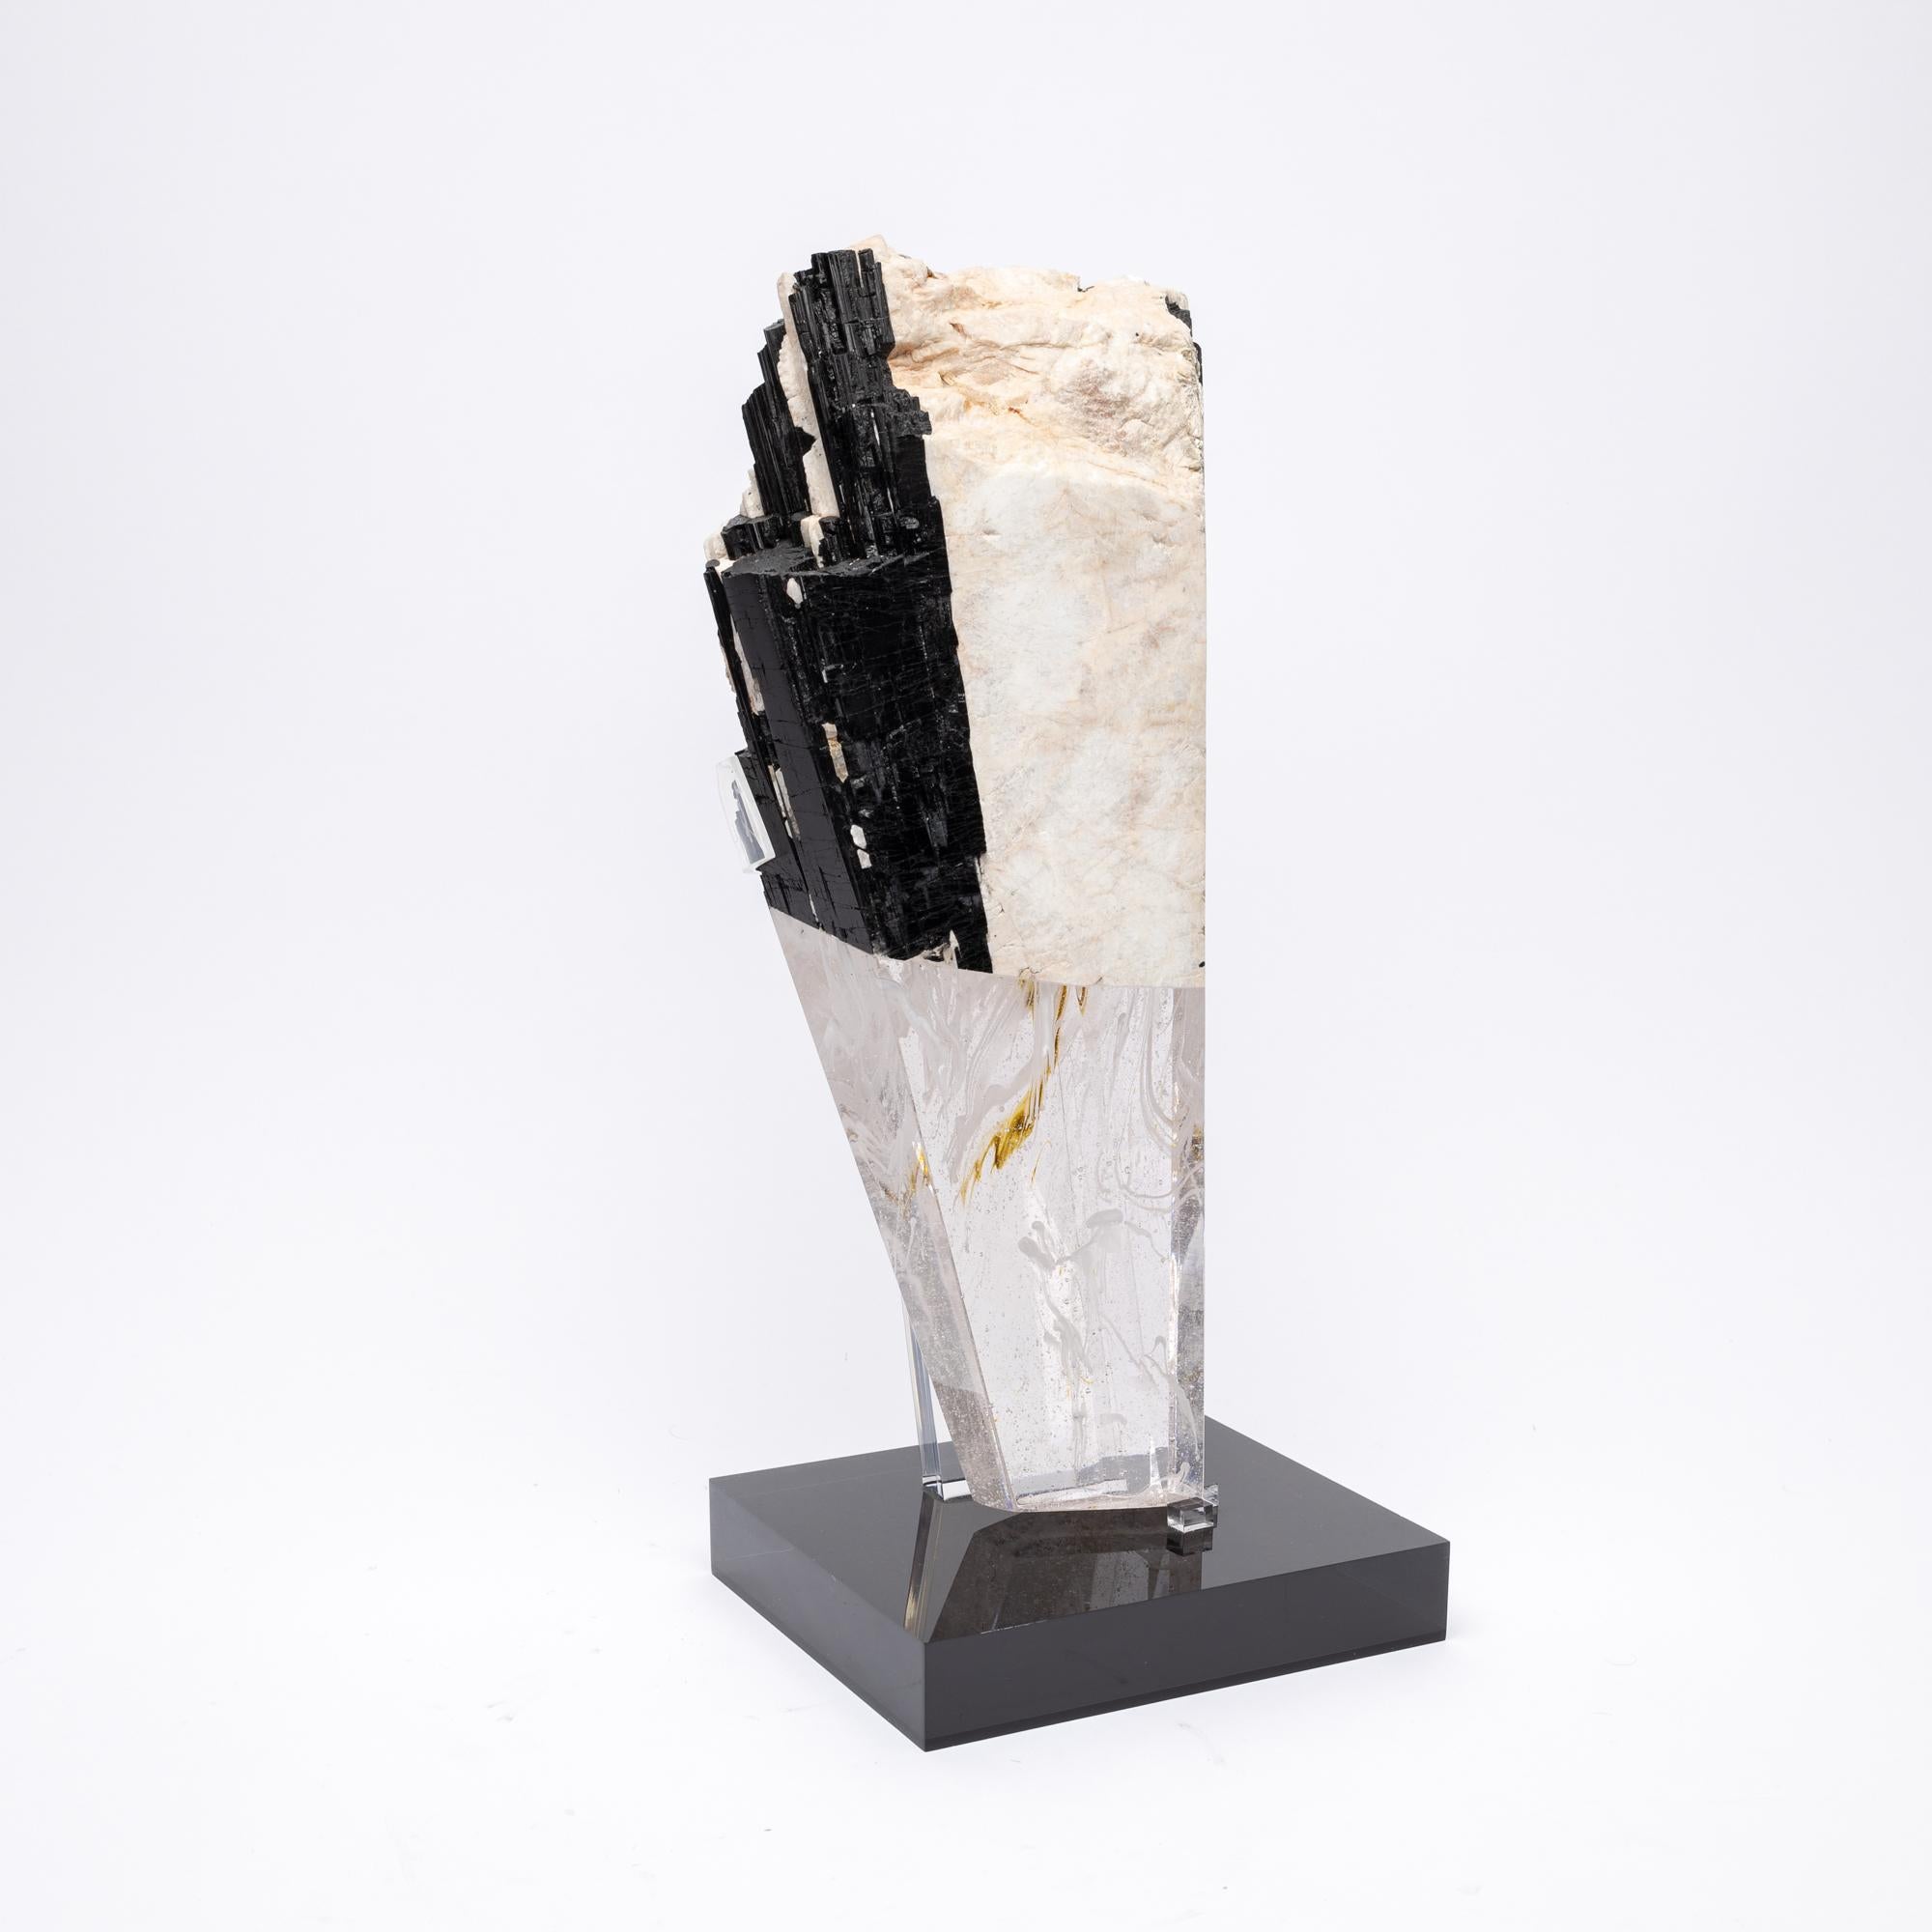 Mexican Deco, Feldspar and Tourmaline Organic Shape Glass Fusion Sculpture on Acrylic 